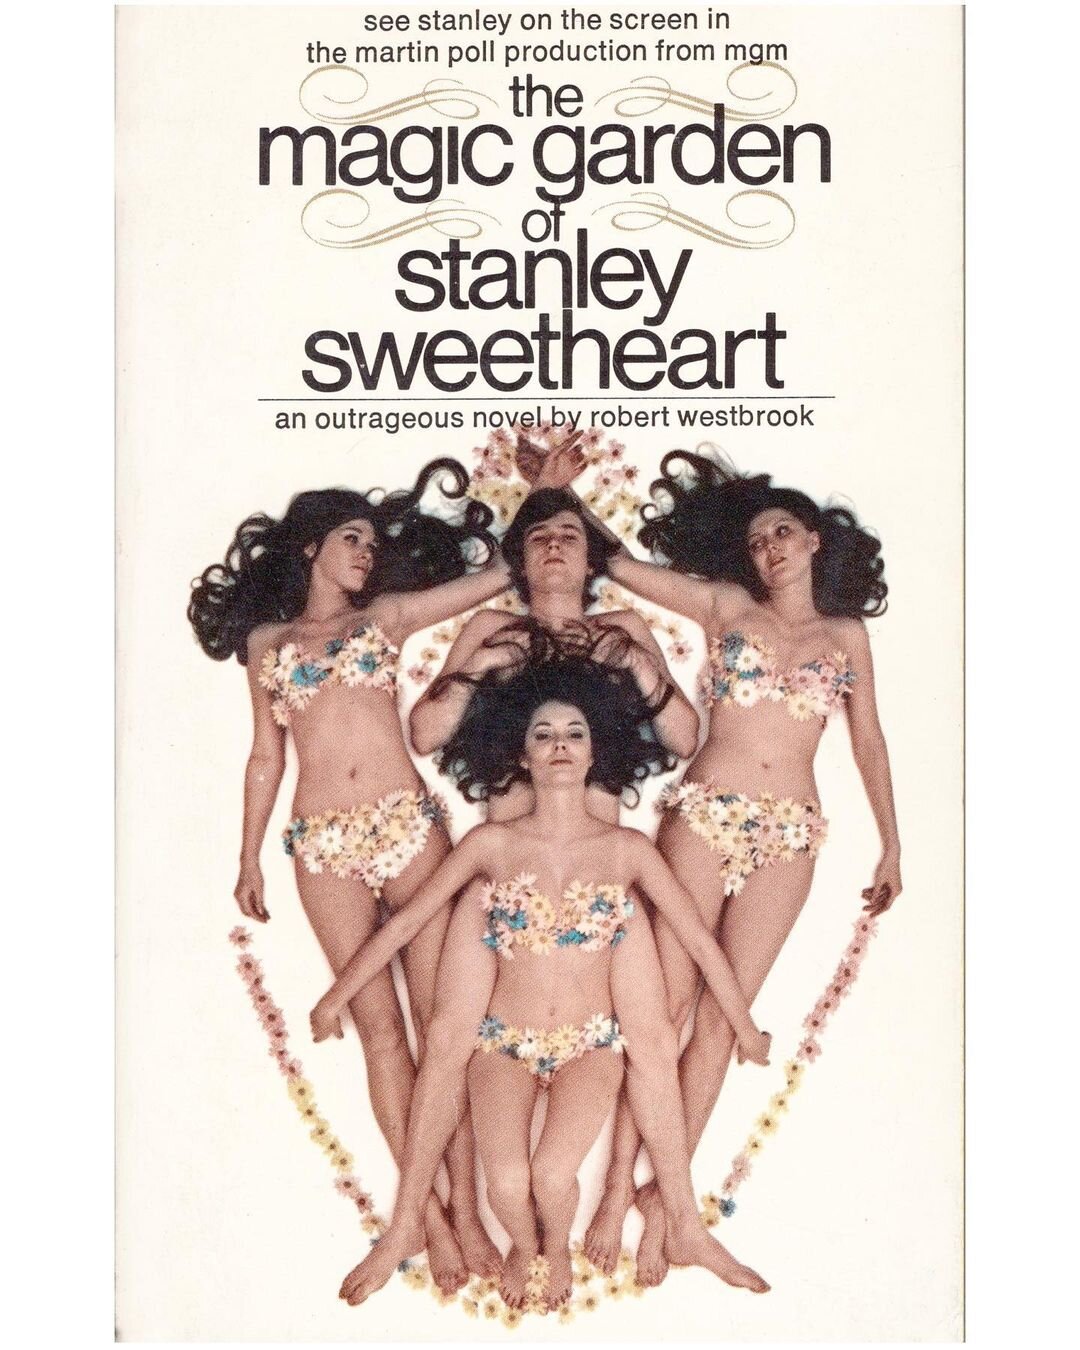 The Magic Garden of Stanley Sweetheart, 1970